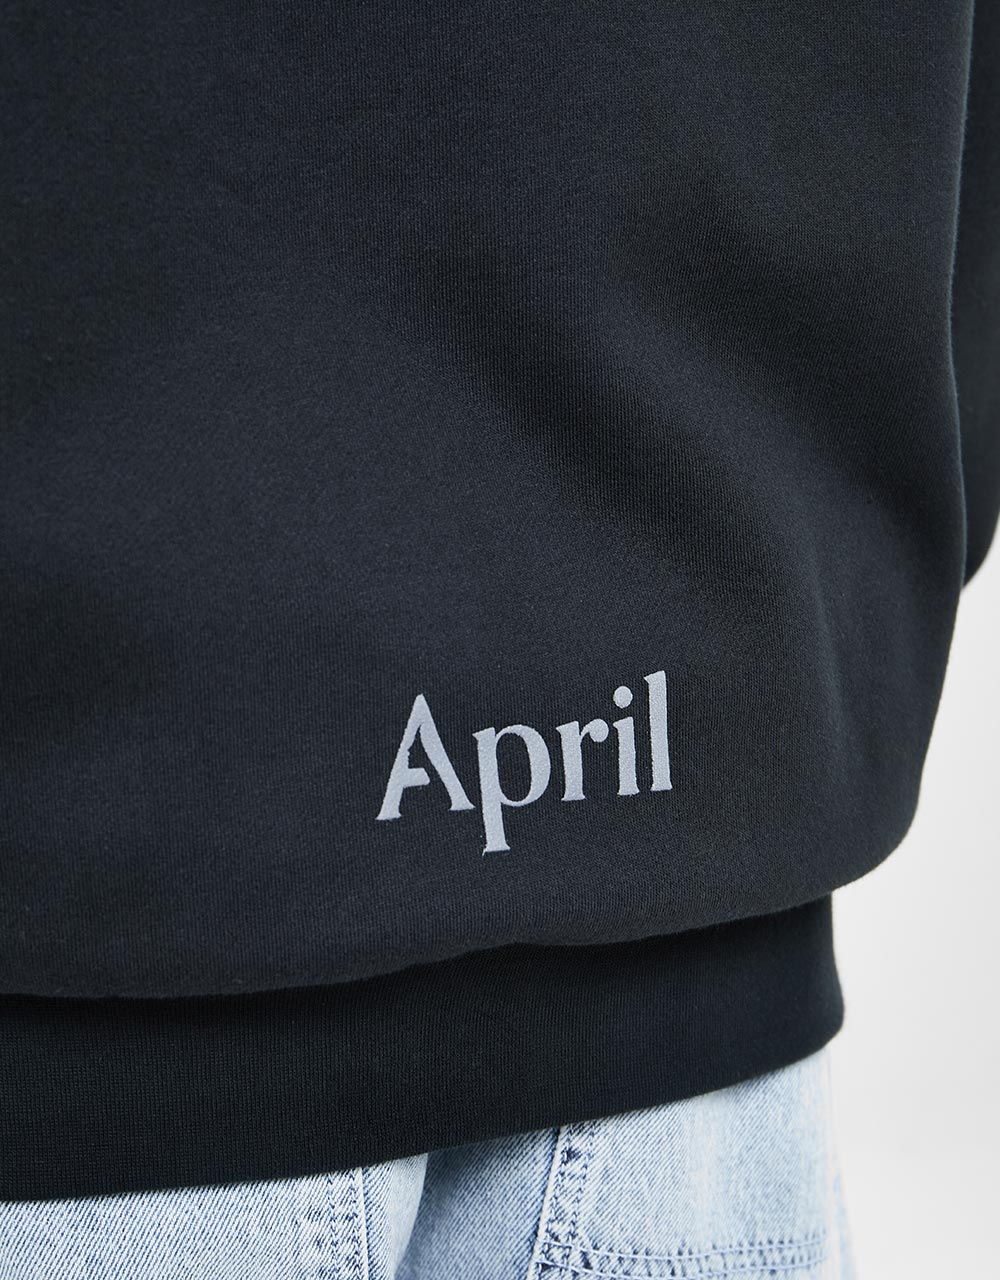 April OG Puff Print Pullover Hoodie - Black